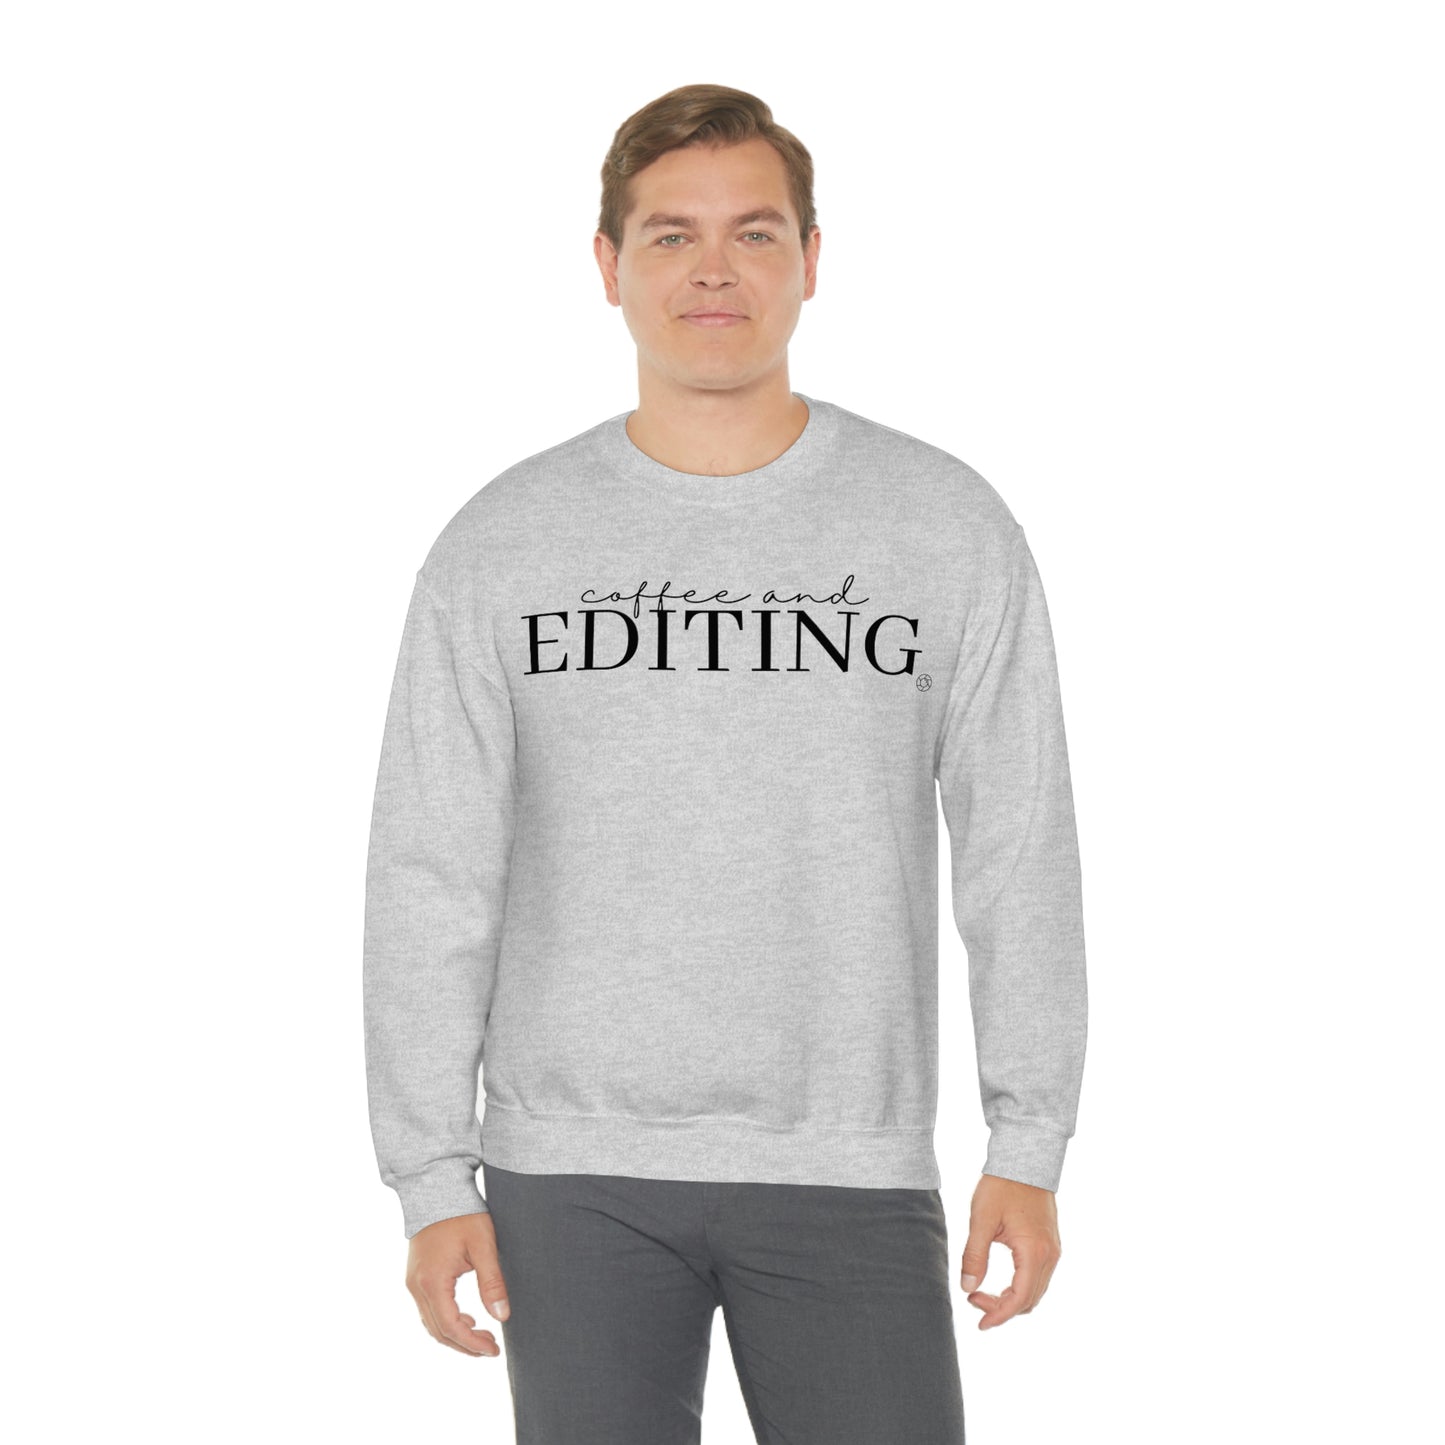 Coffee & Editing - Heavy Blend™ Crewneck Sweatshirt